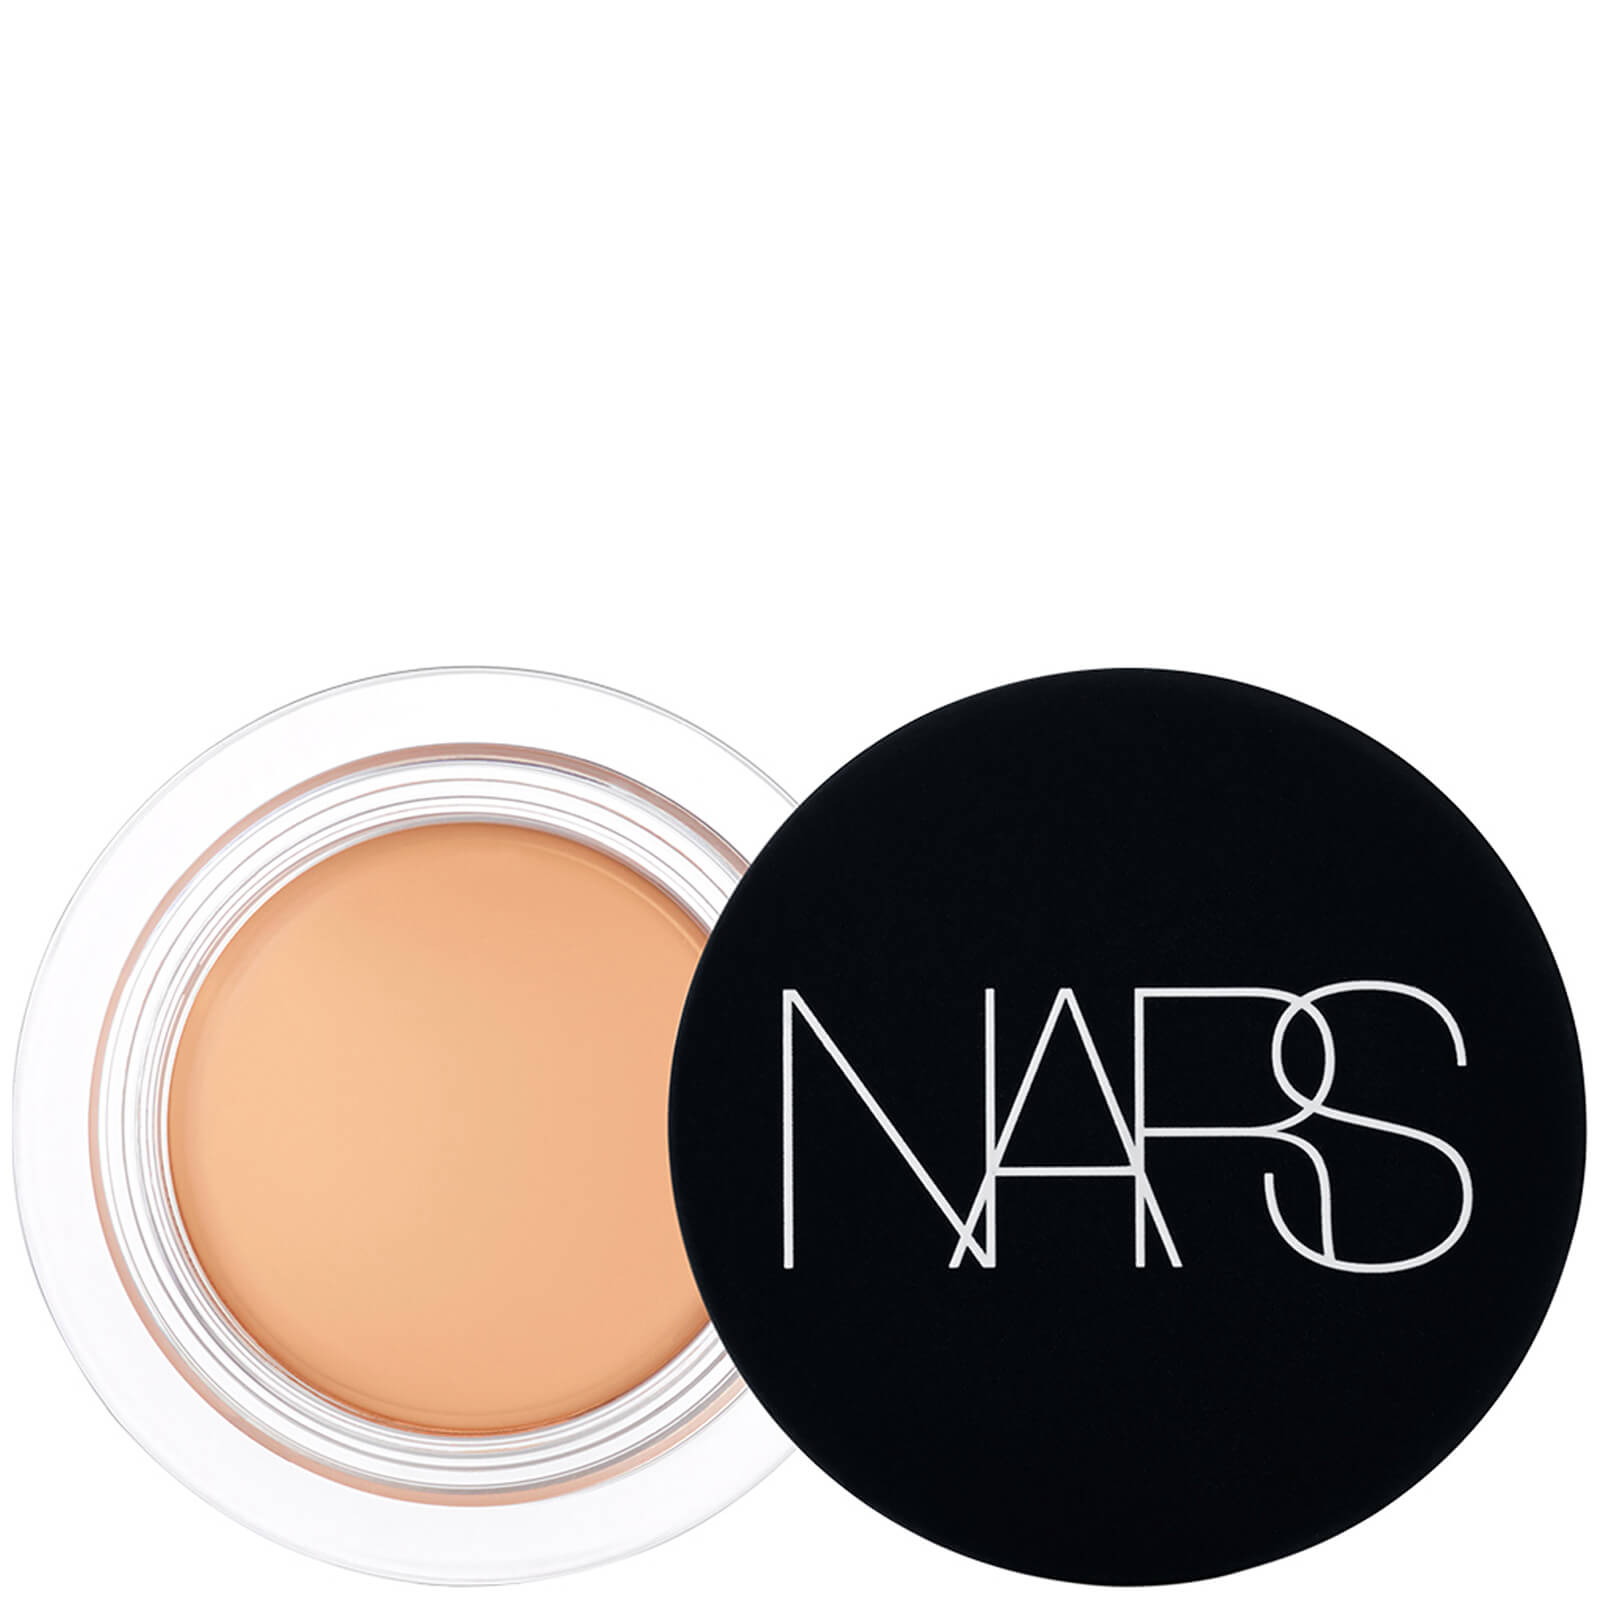 NARS Cosmetics Soft Matte Complete Concealer 5g (Various Shades) - Custard